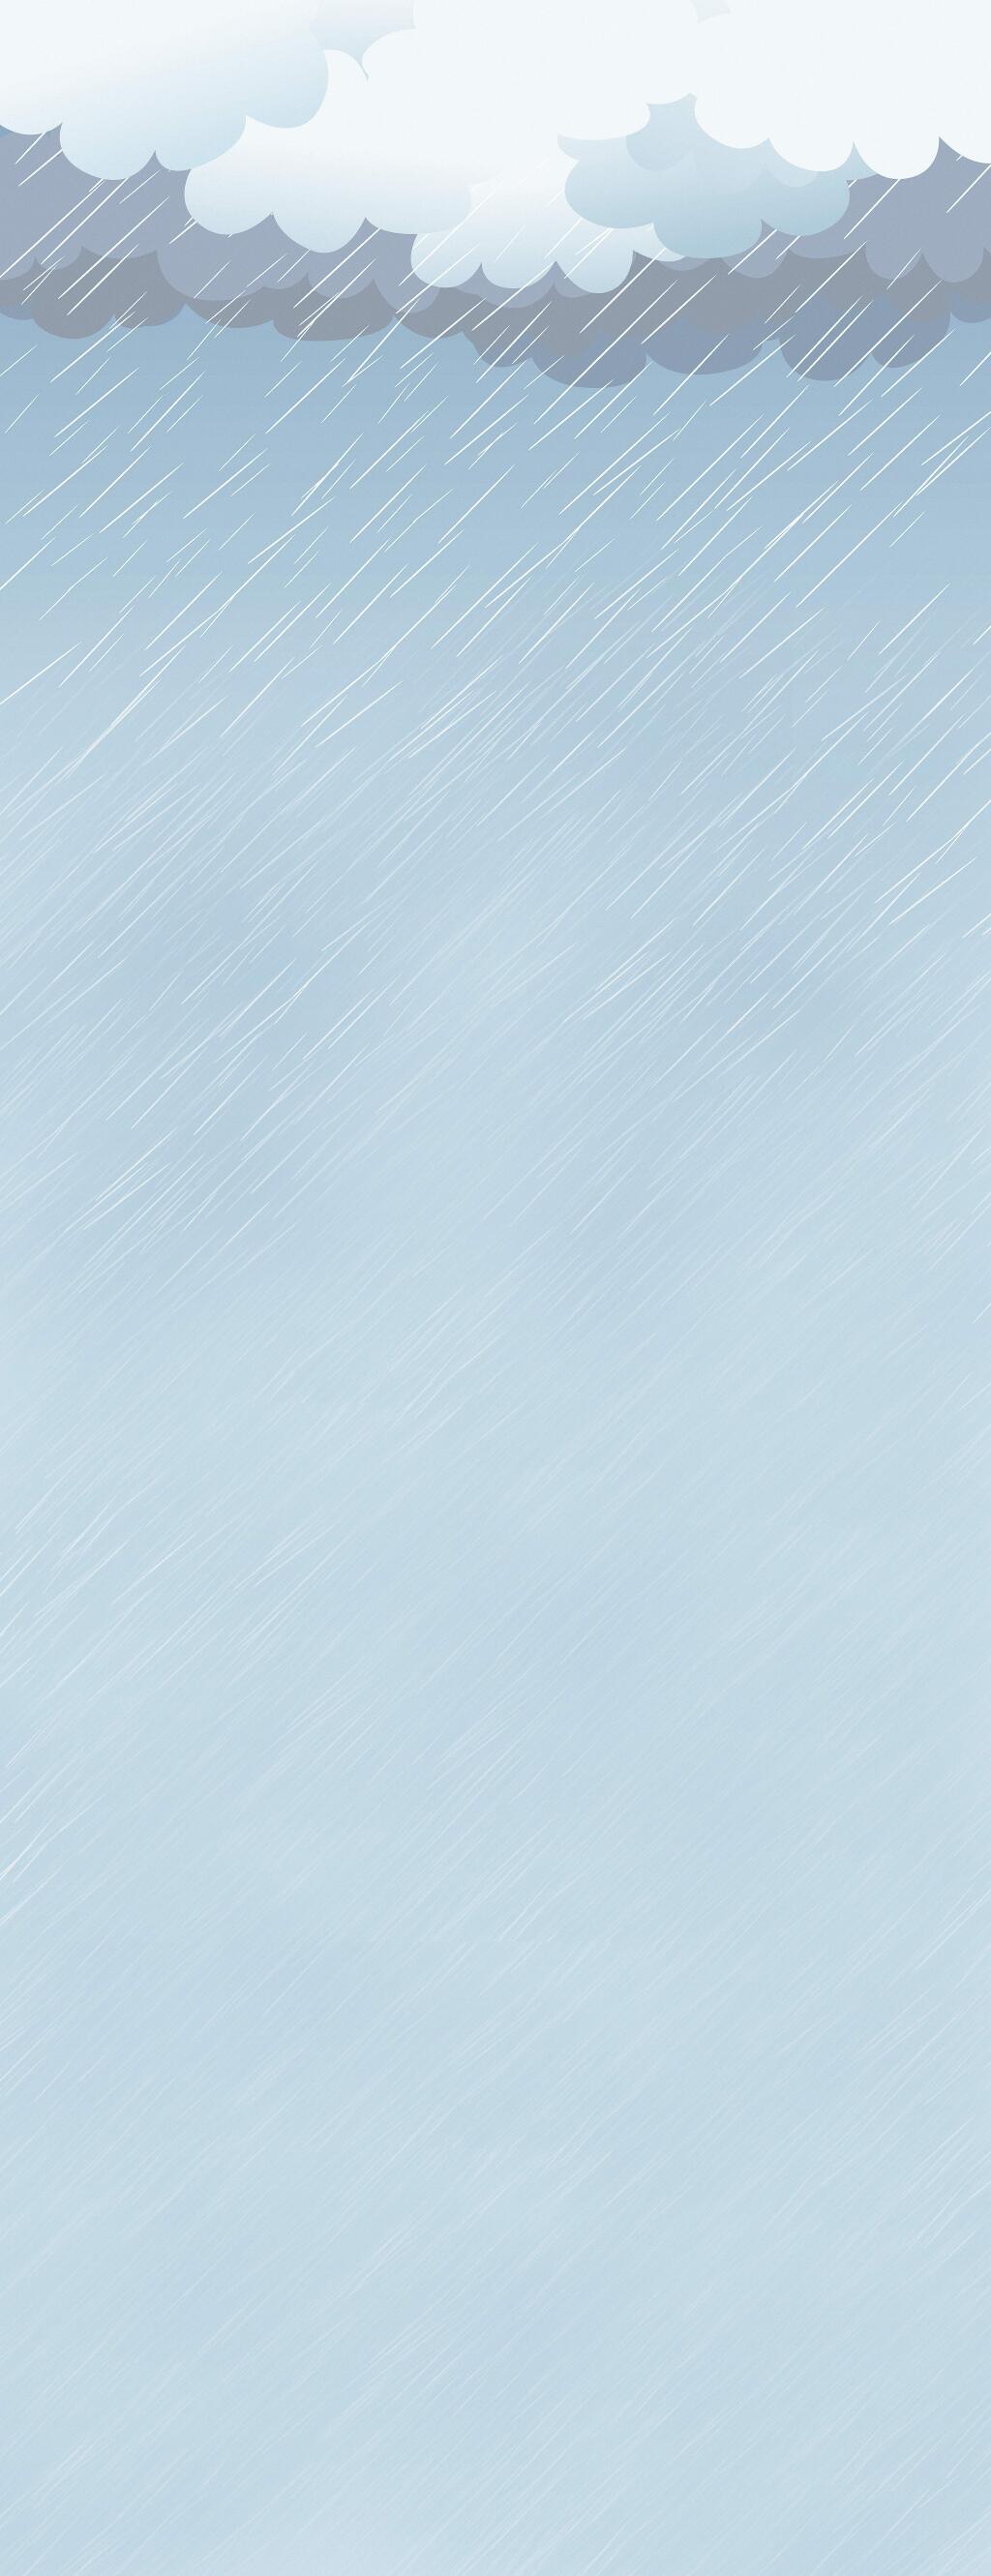 rain